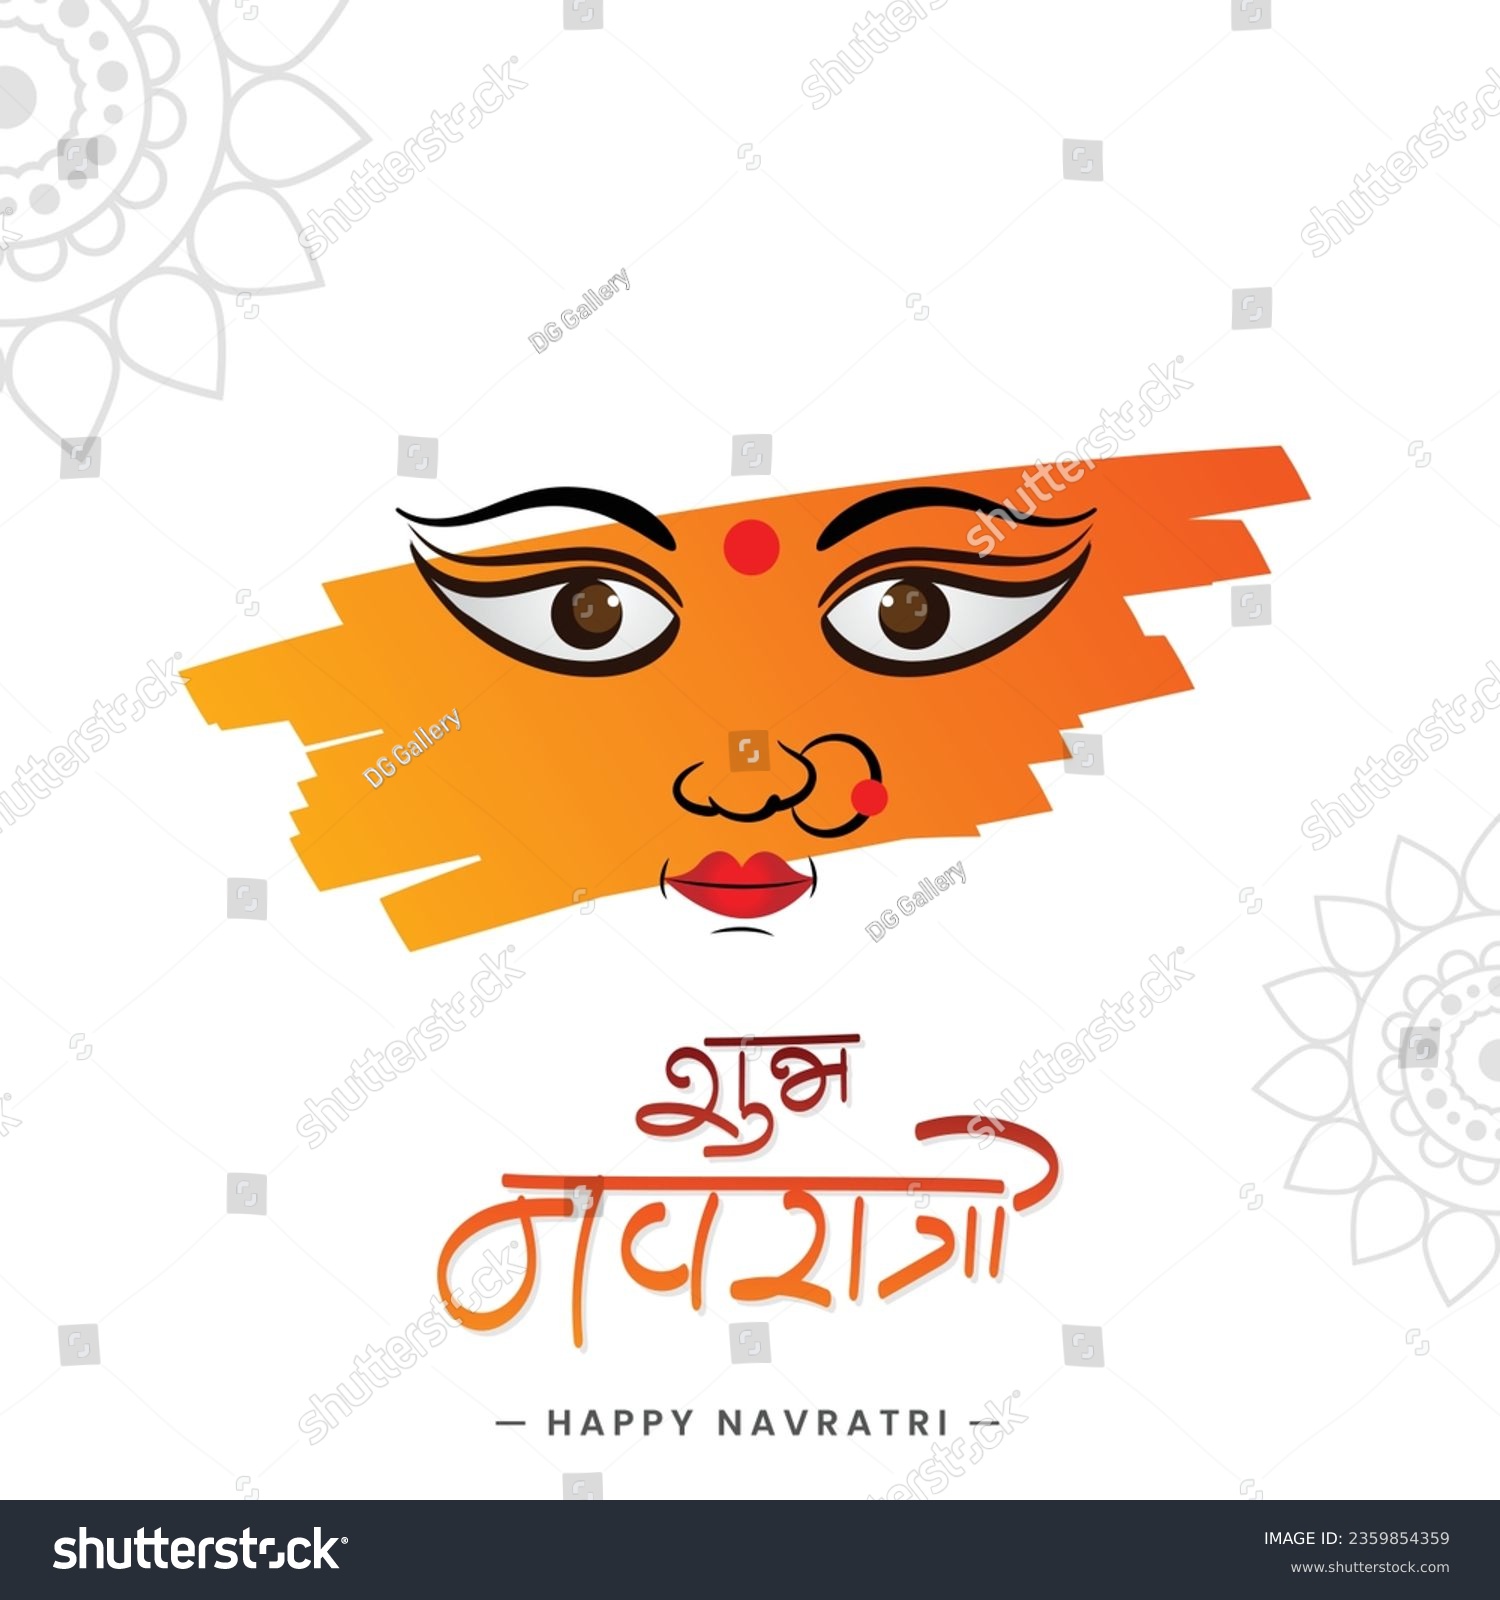 SVG of Happy Navratri beautiful hindi calligraphy with goddess durga face illustration, Hindi Text of Shubh Navratri Means 'Nine Nights of Divinity' svg